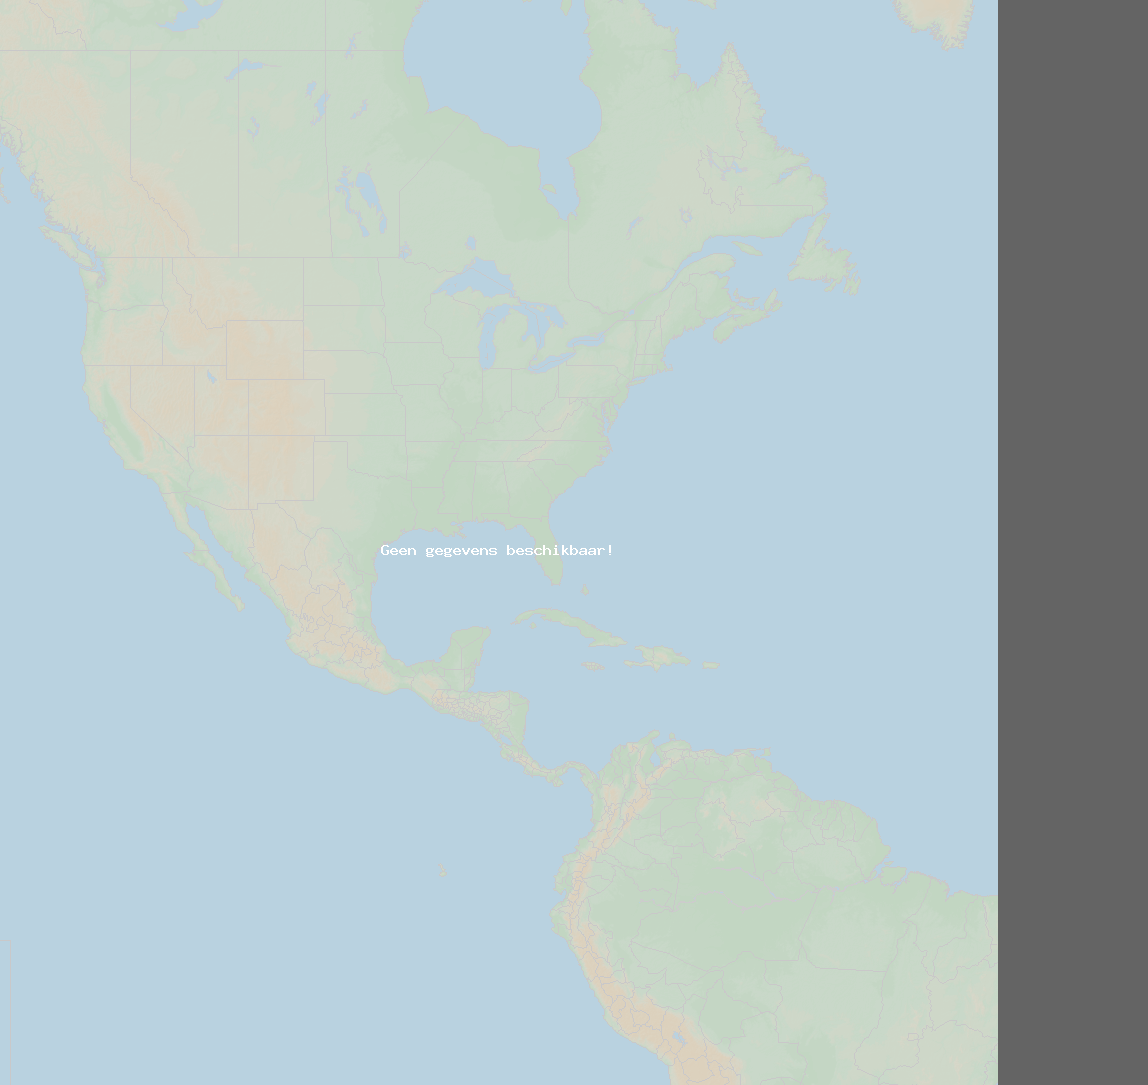 Inslagverhouding (Station Baie-Comeau QC) North America 2019 